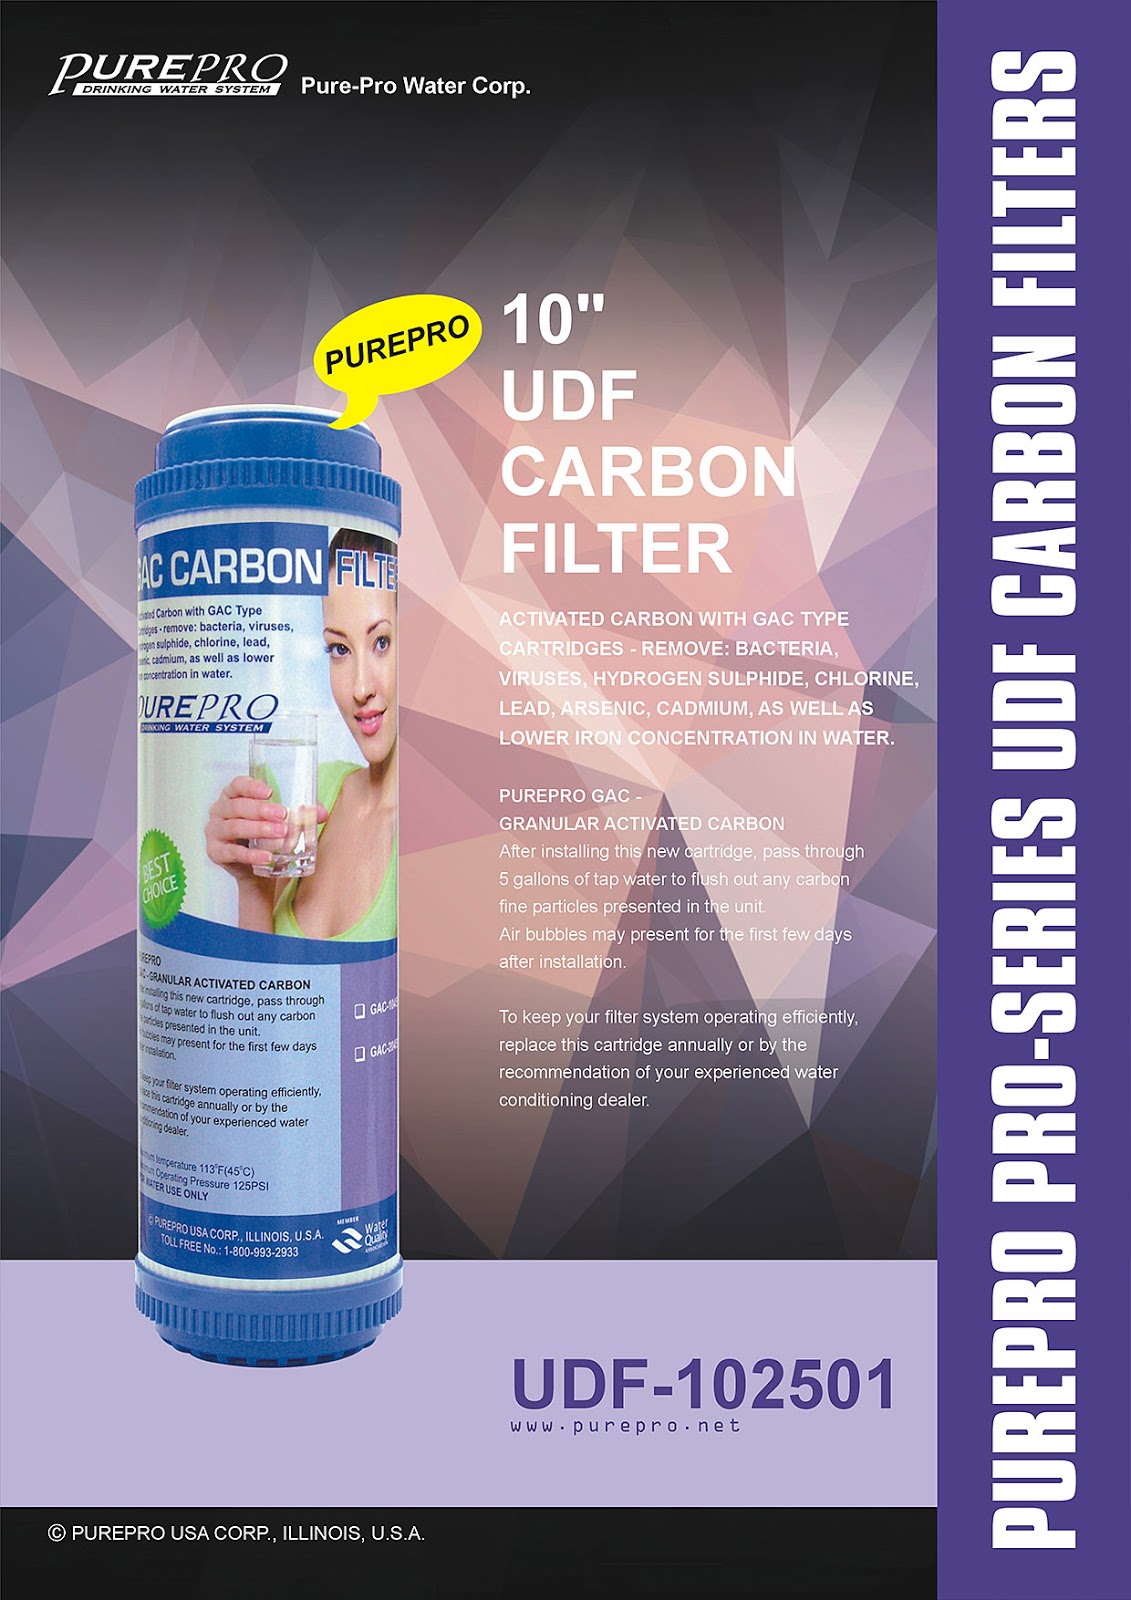 PurePro® USA 10" UDF Carbon Filter - PurePro UDF-102501